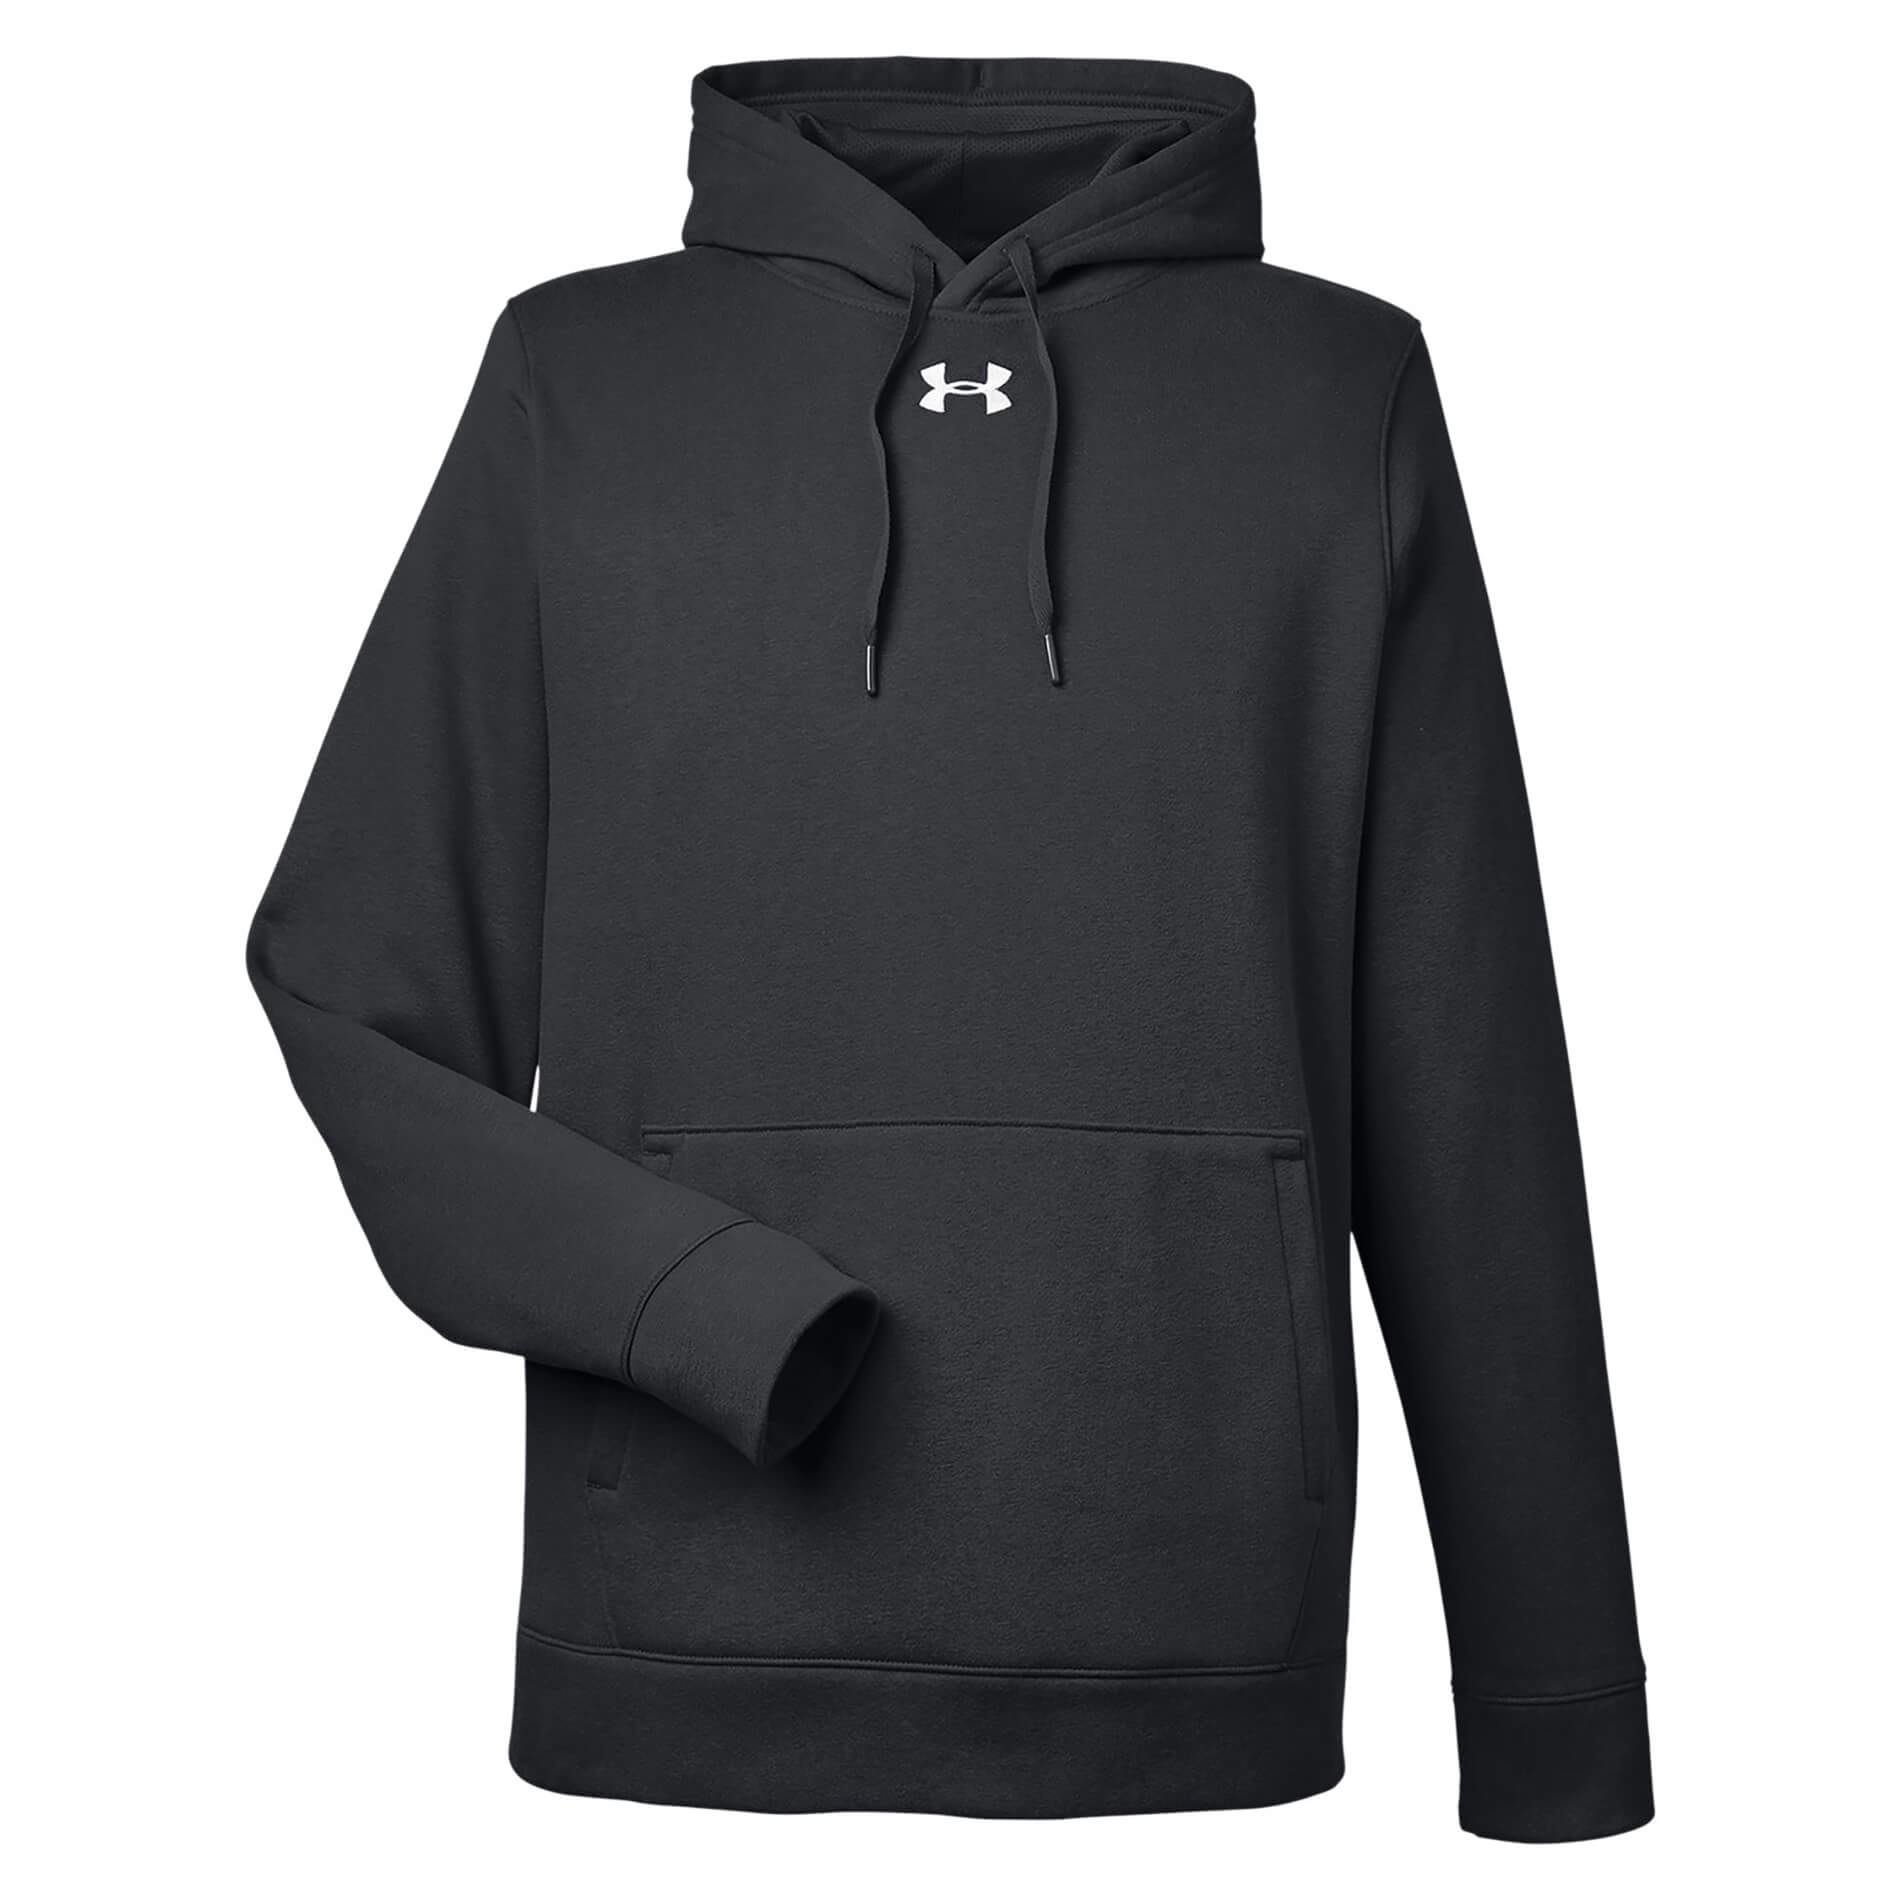 LRS Online Store: Men's Under Armour Hustle Hooded Sweatshirt